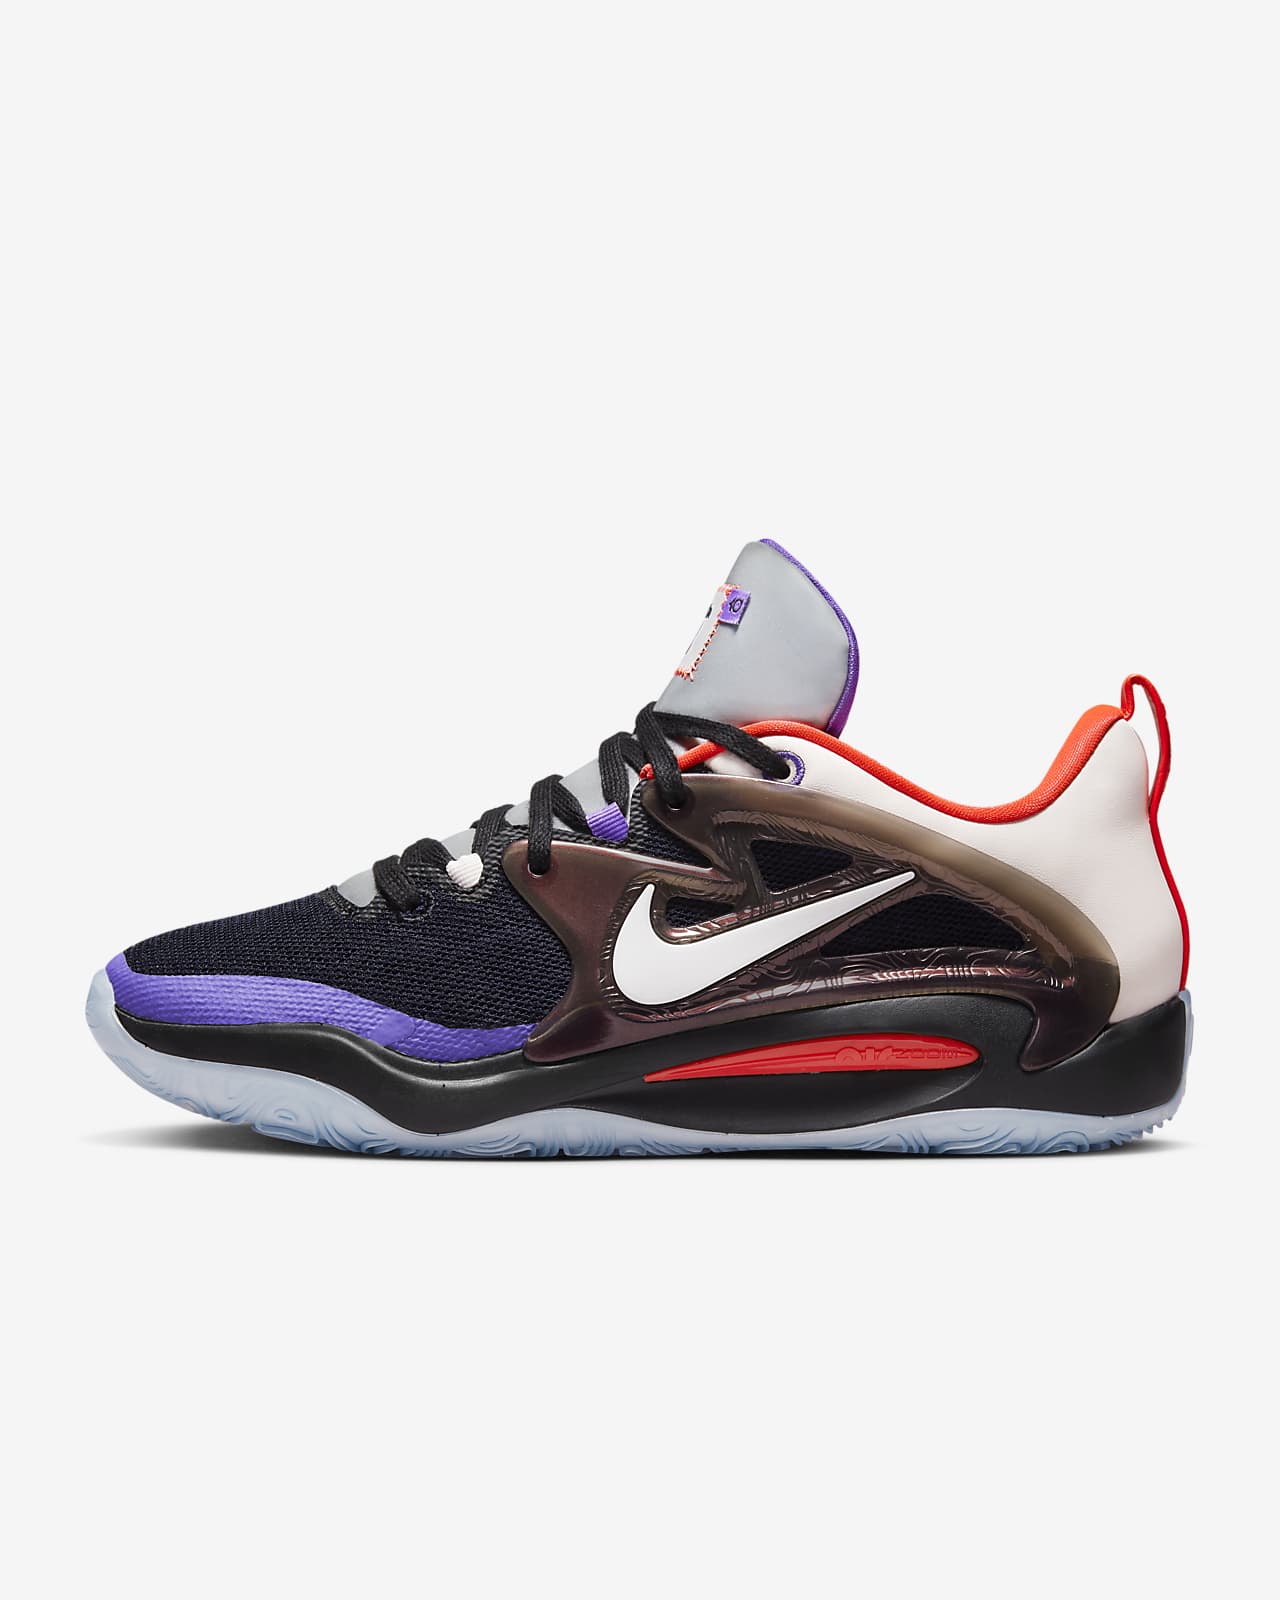 EP Basketball Shoes. Nike